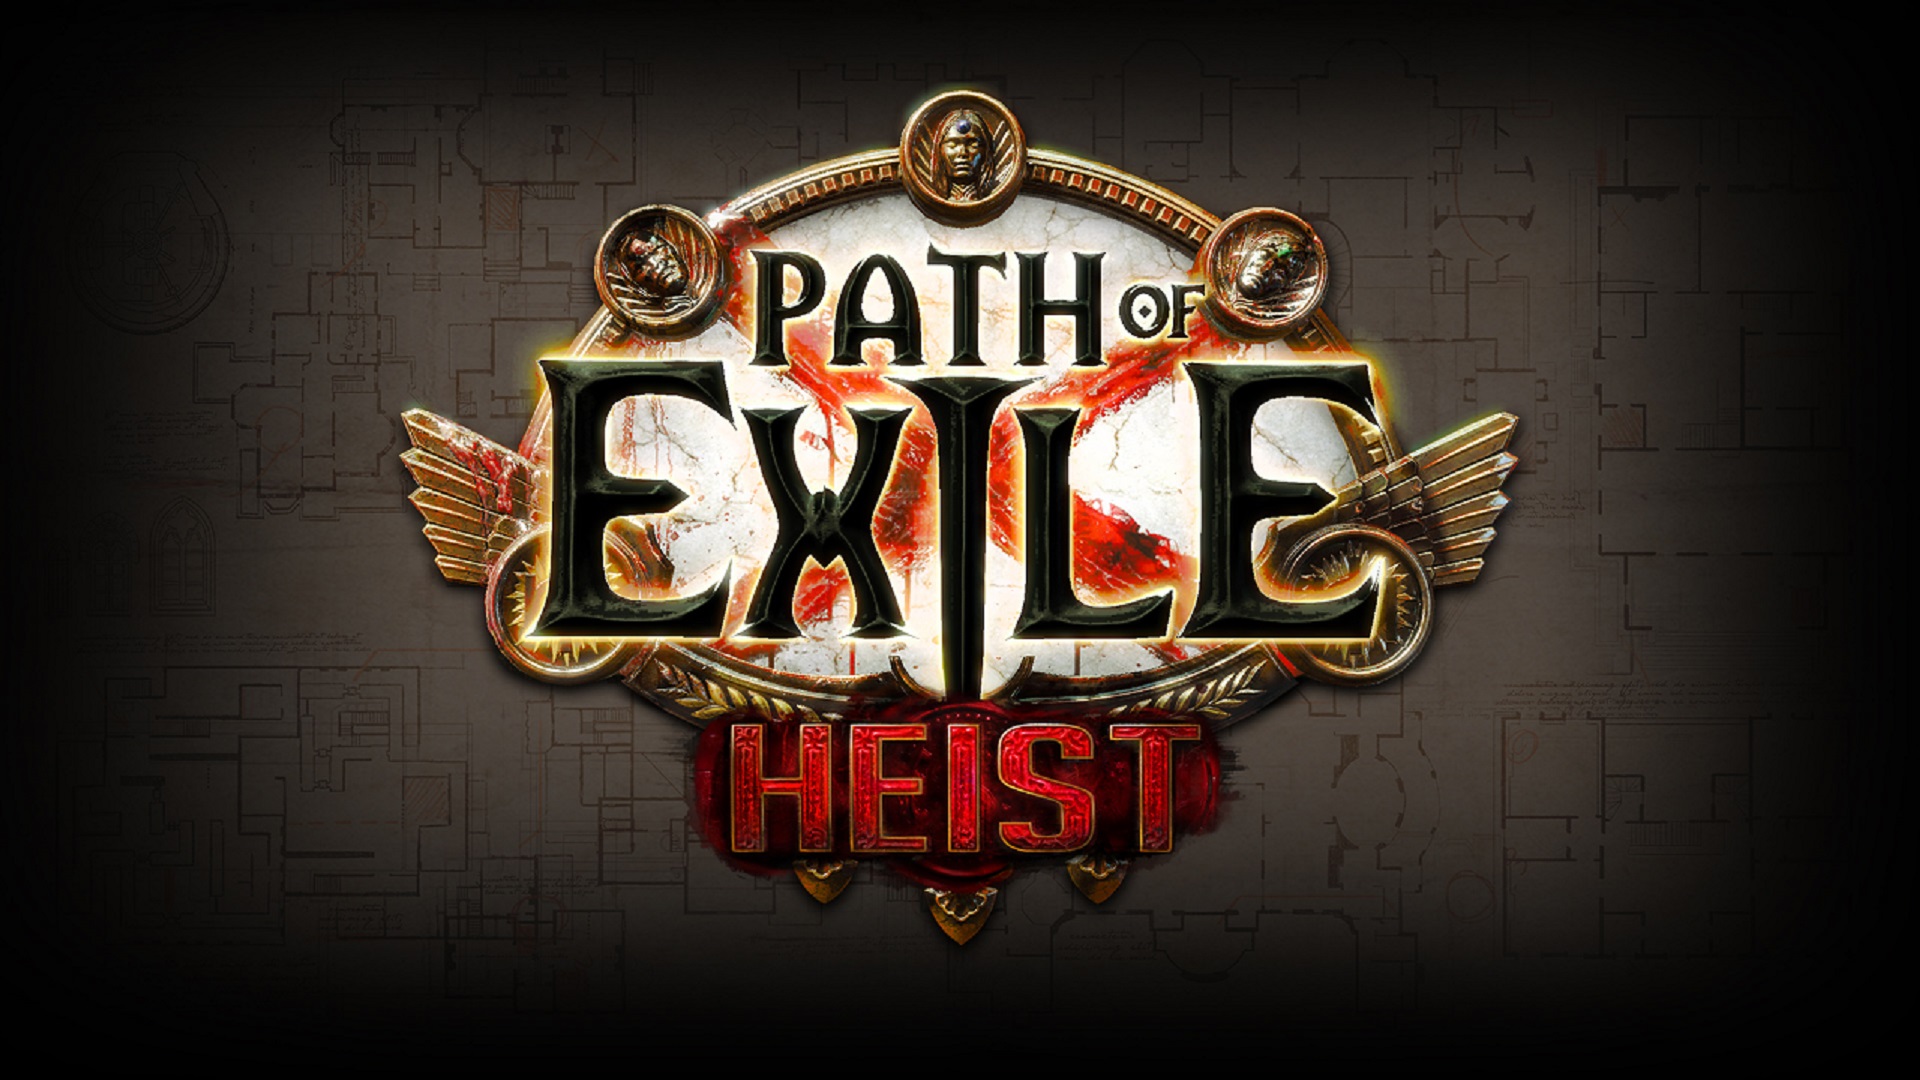 path of exile 2 reddit